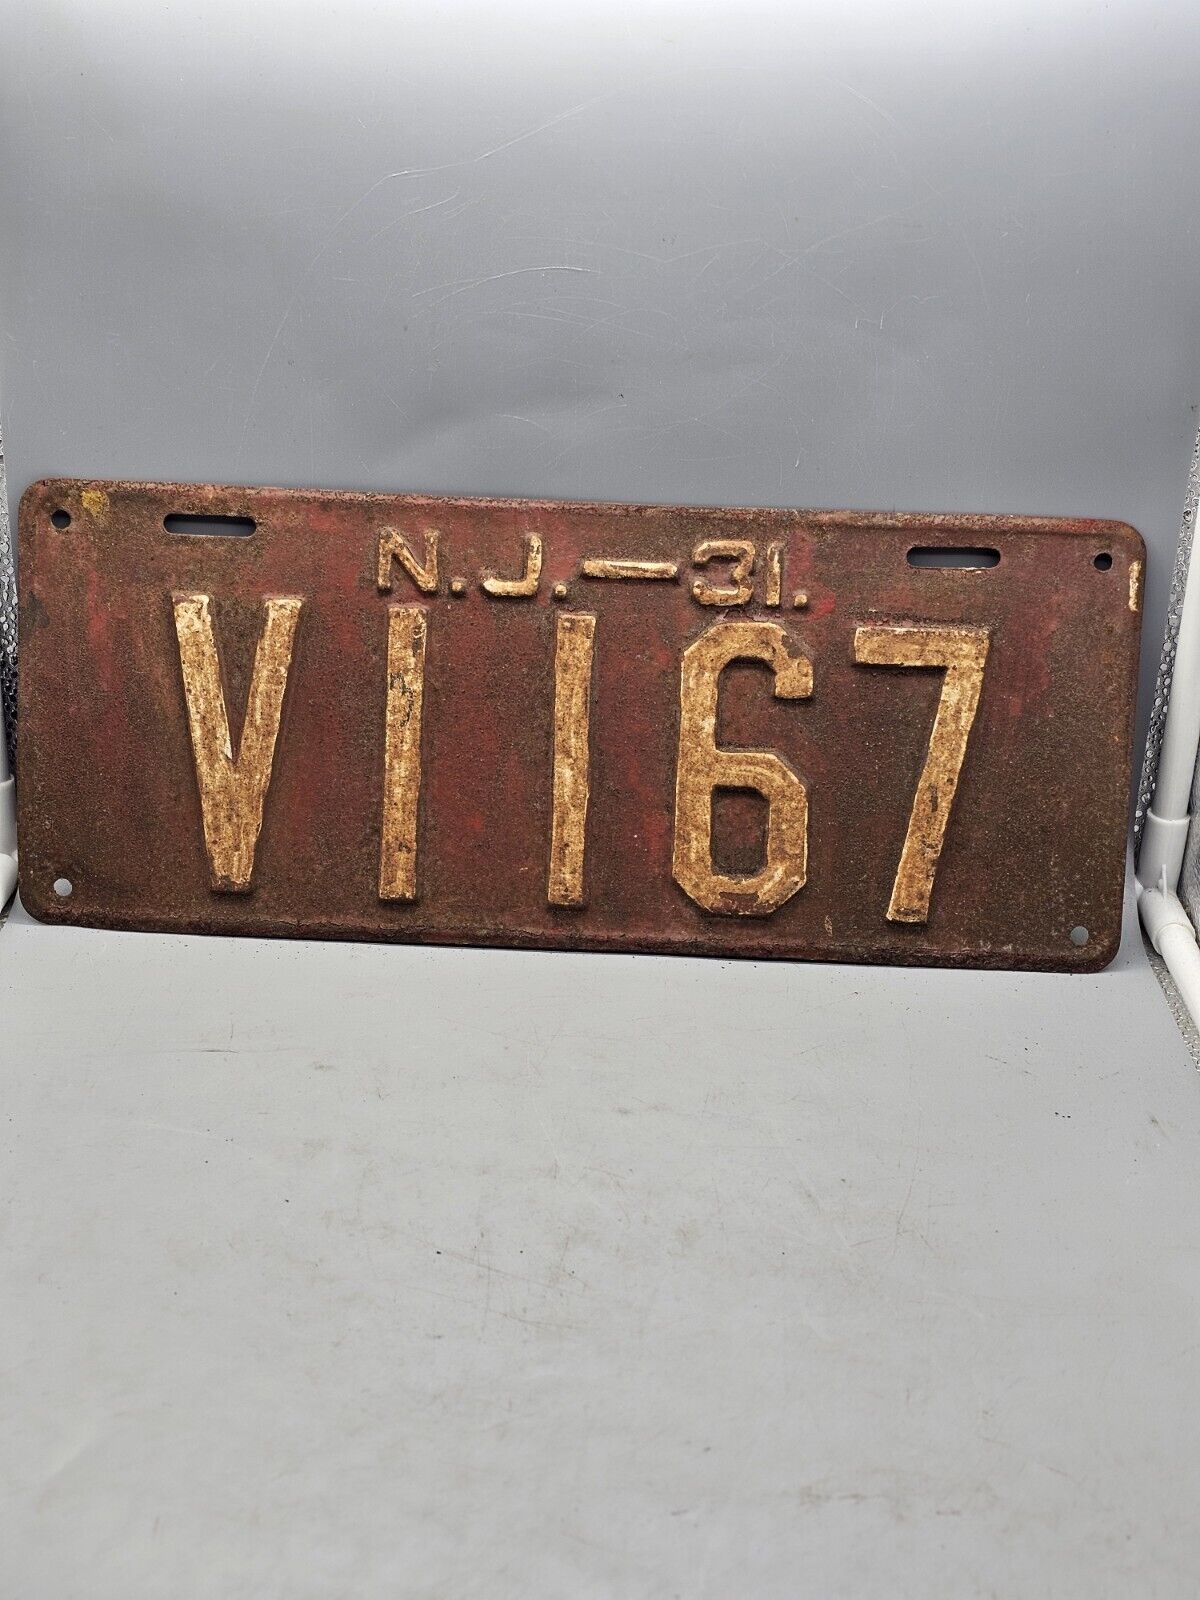 1931 New Jersey  License Plate V1167 Mancave Decor Garage Art Craft